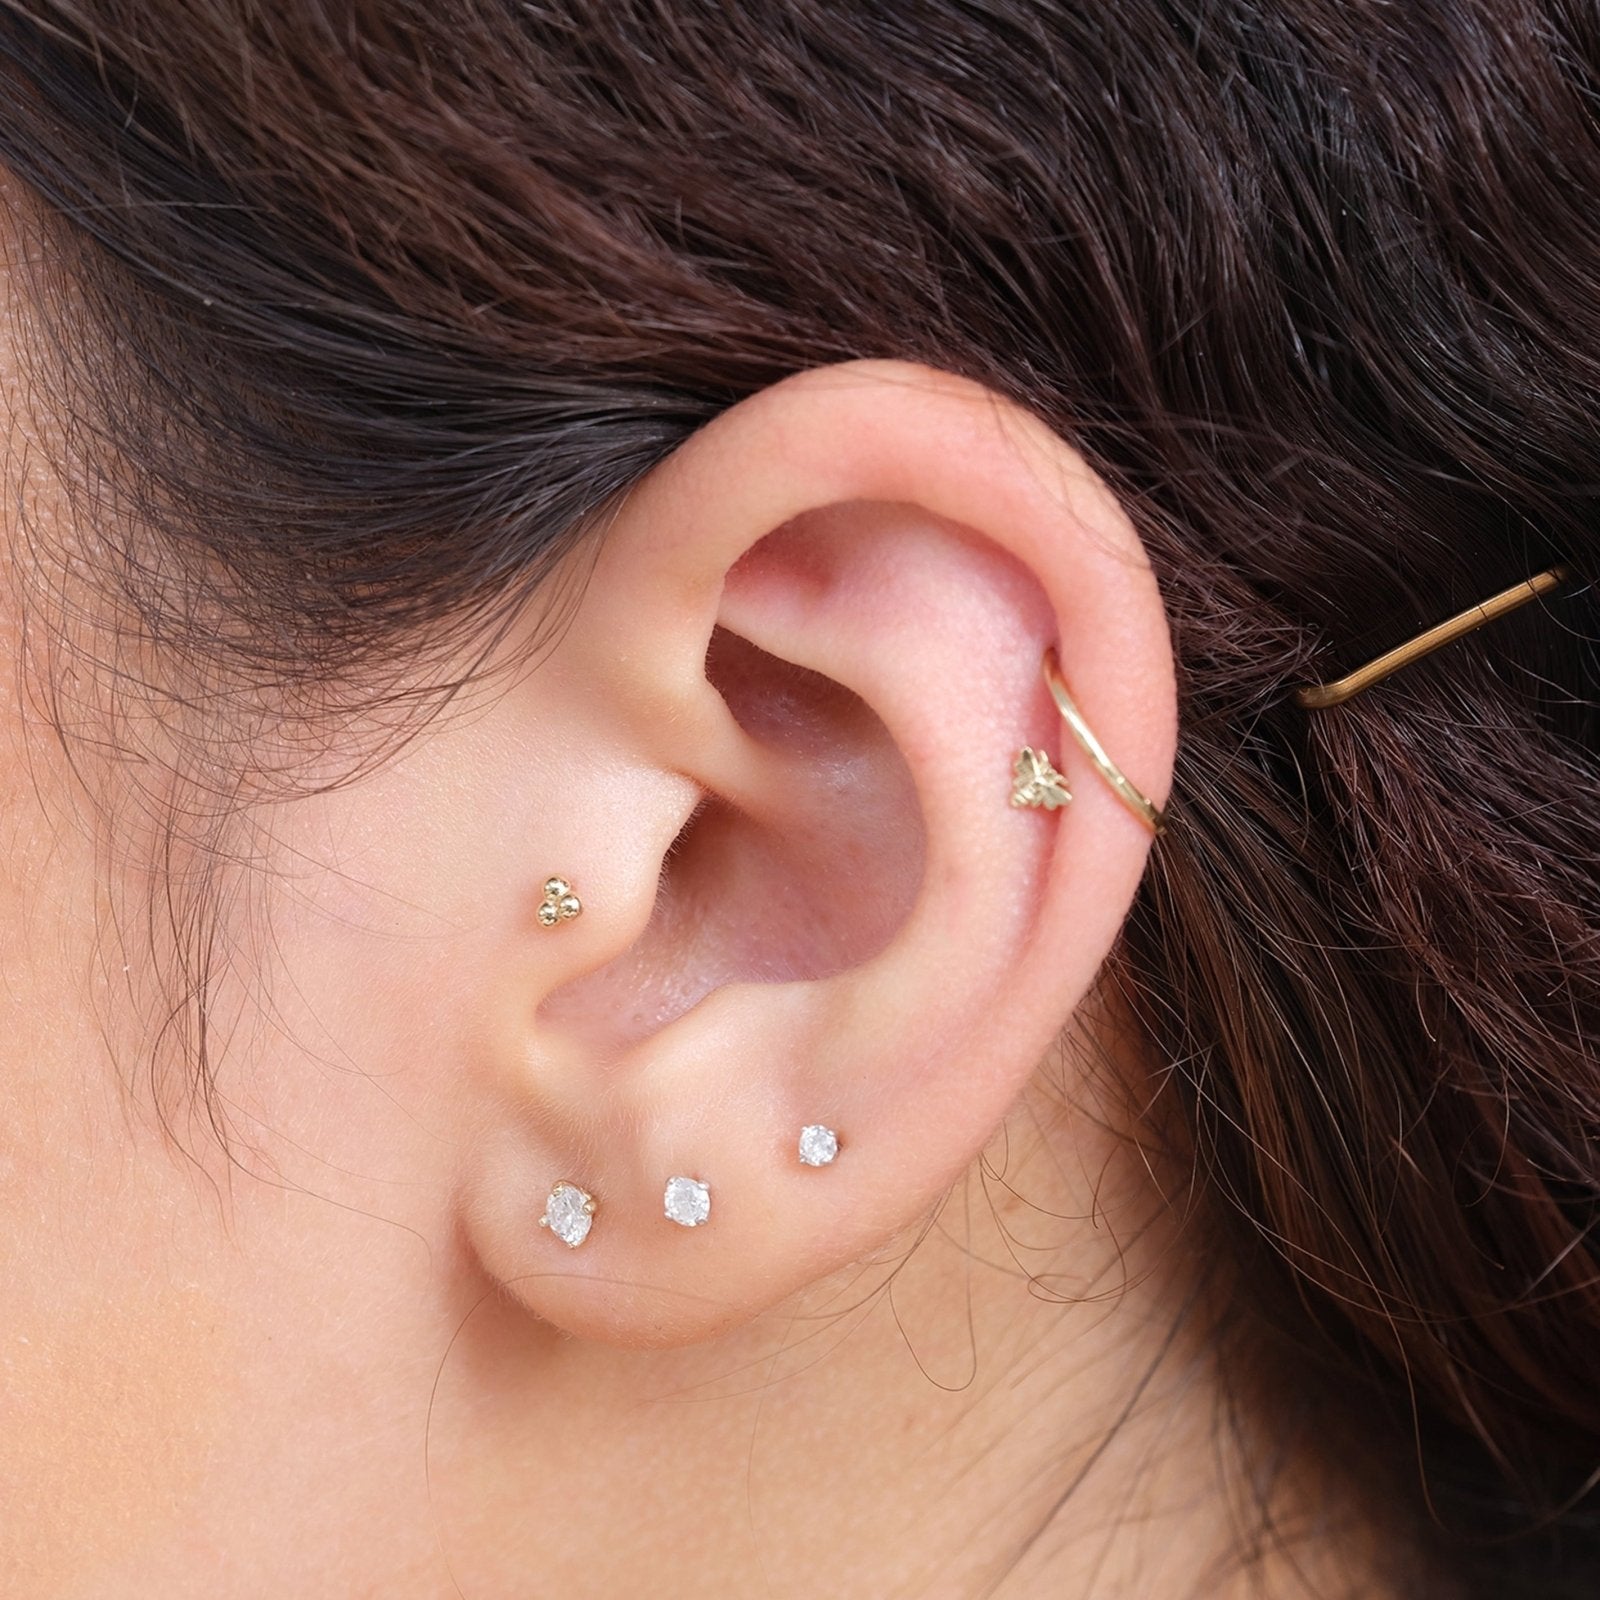 Trio Threaded Flat Back Studs Earring in 14K Solid Gold/Pair, Women's by Gorjana